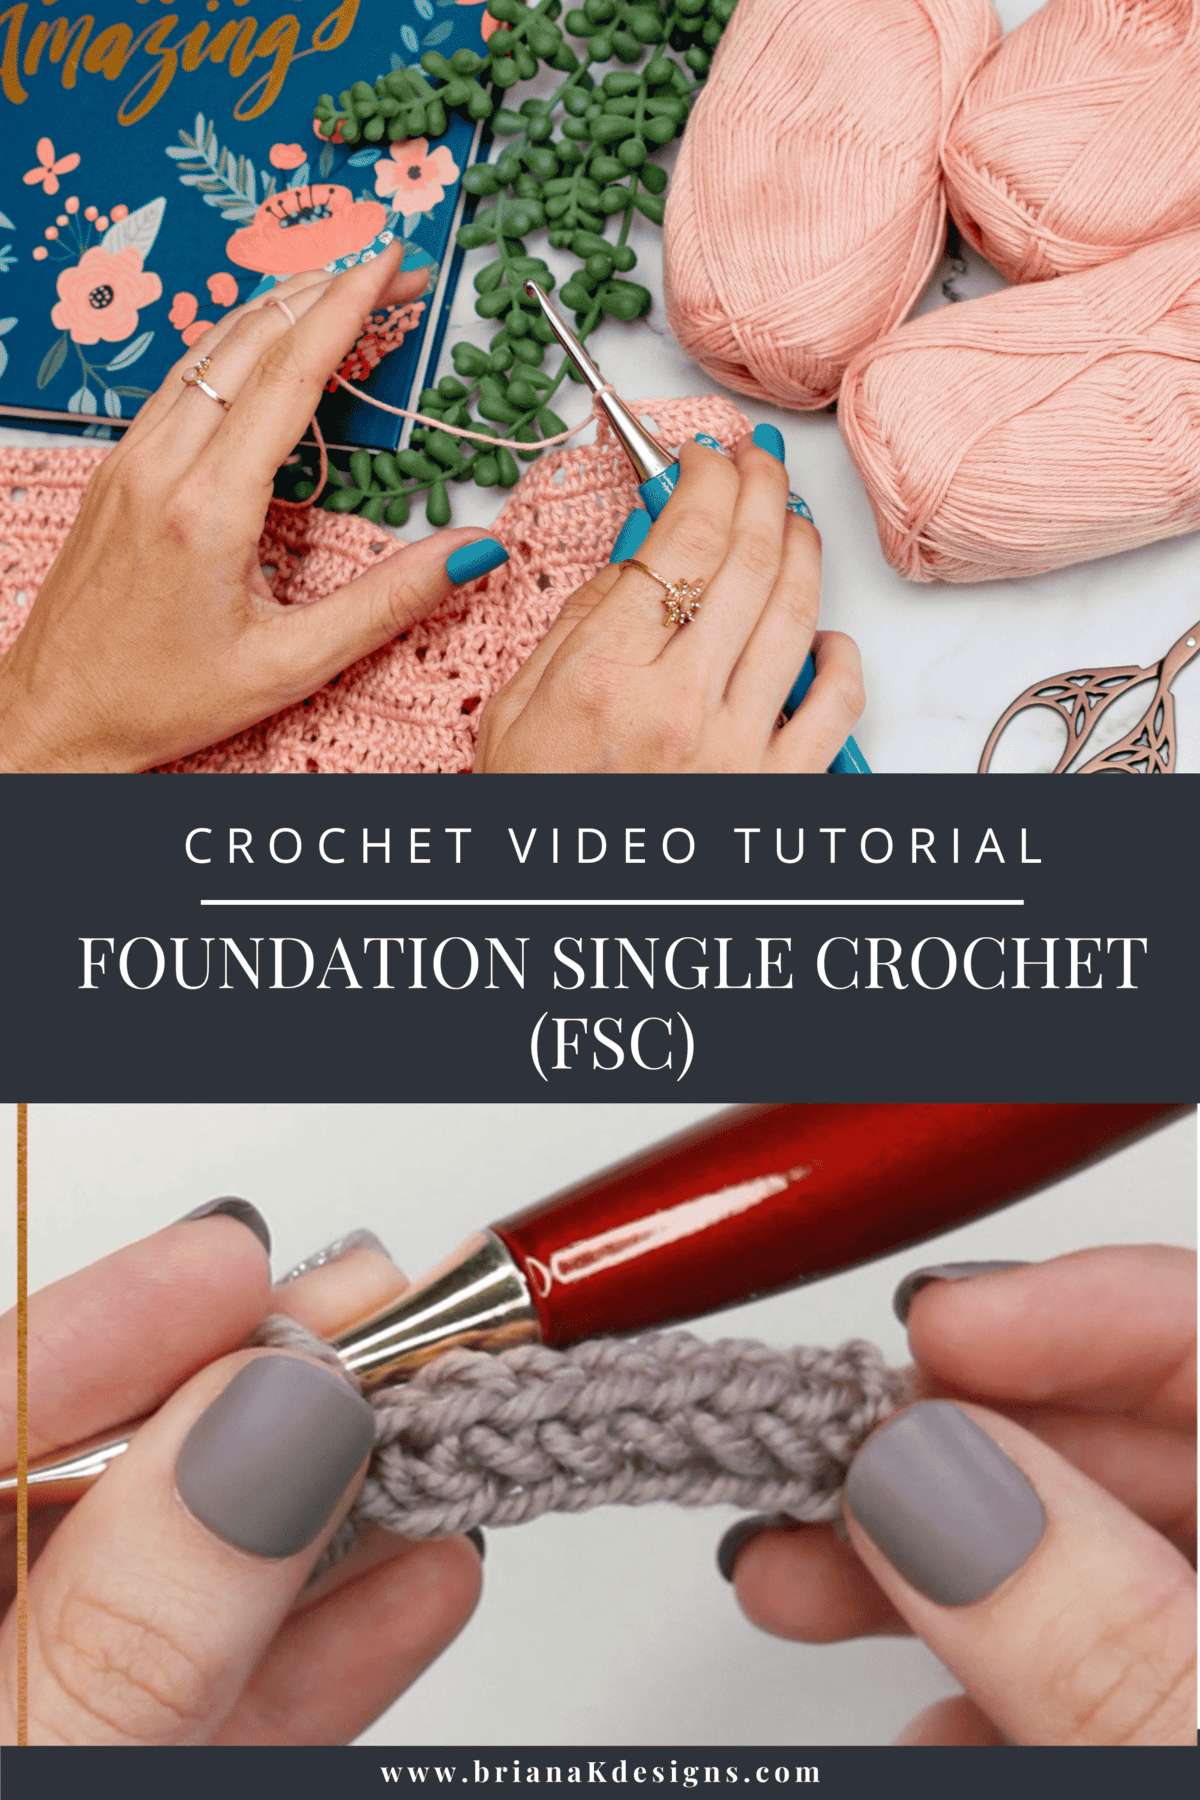 How to Easily Foundation Single Crochet (FSC)